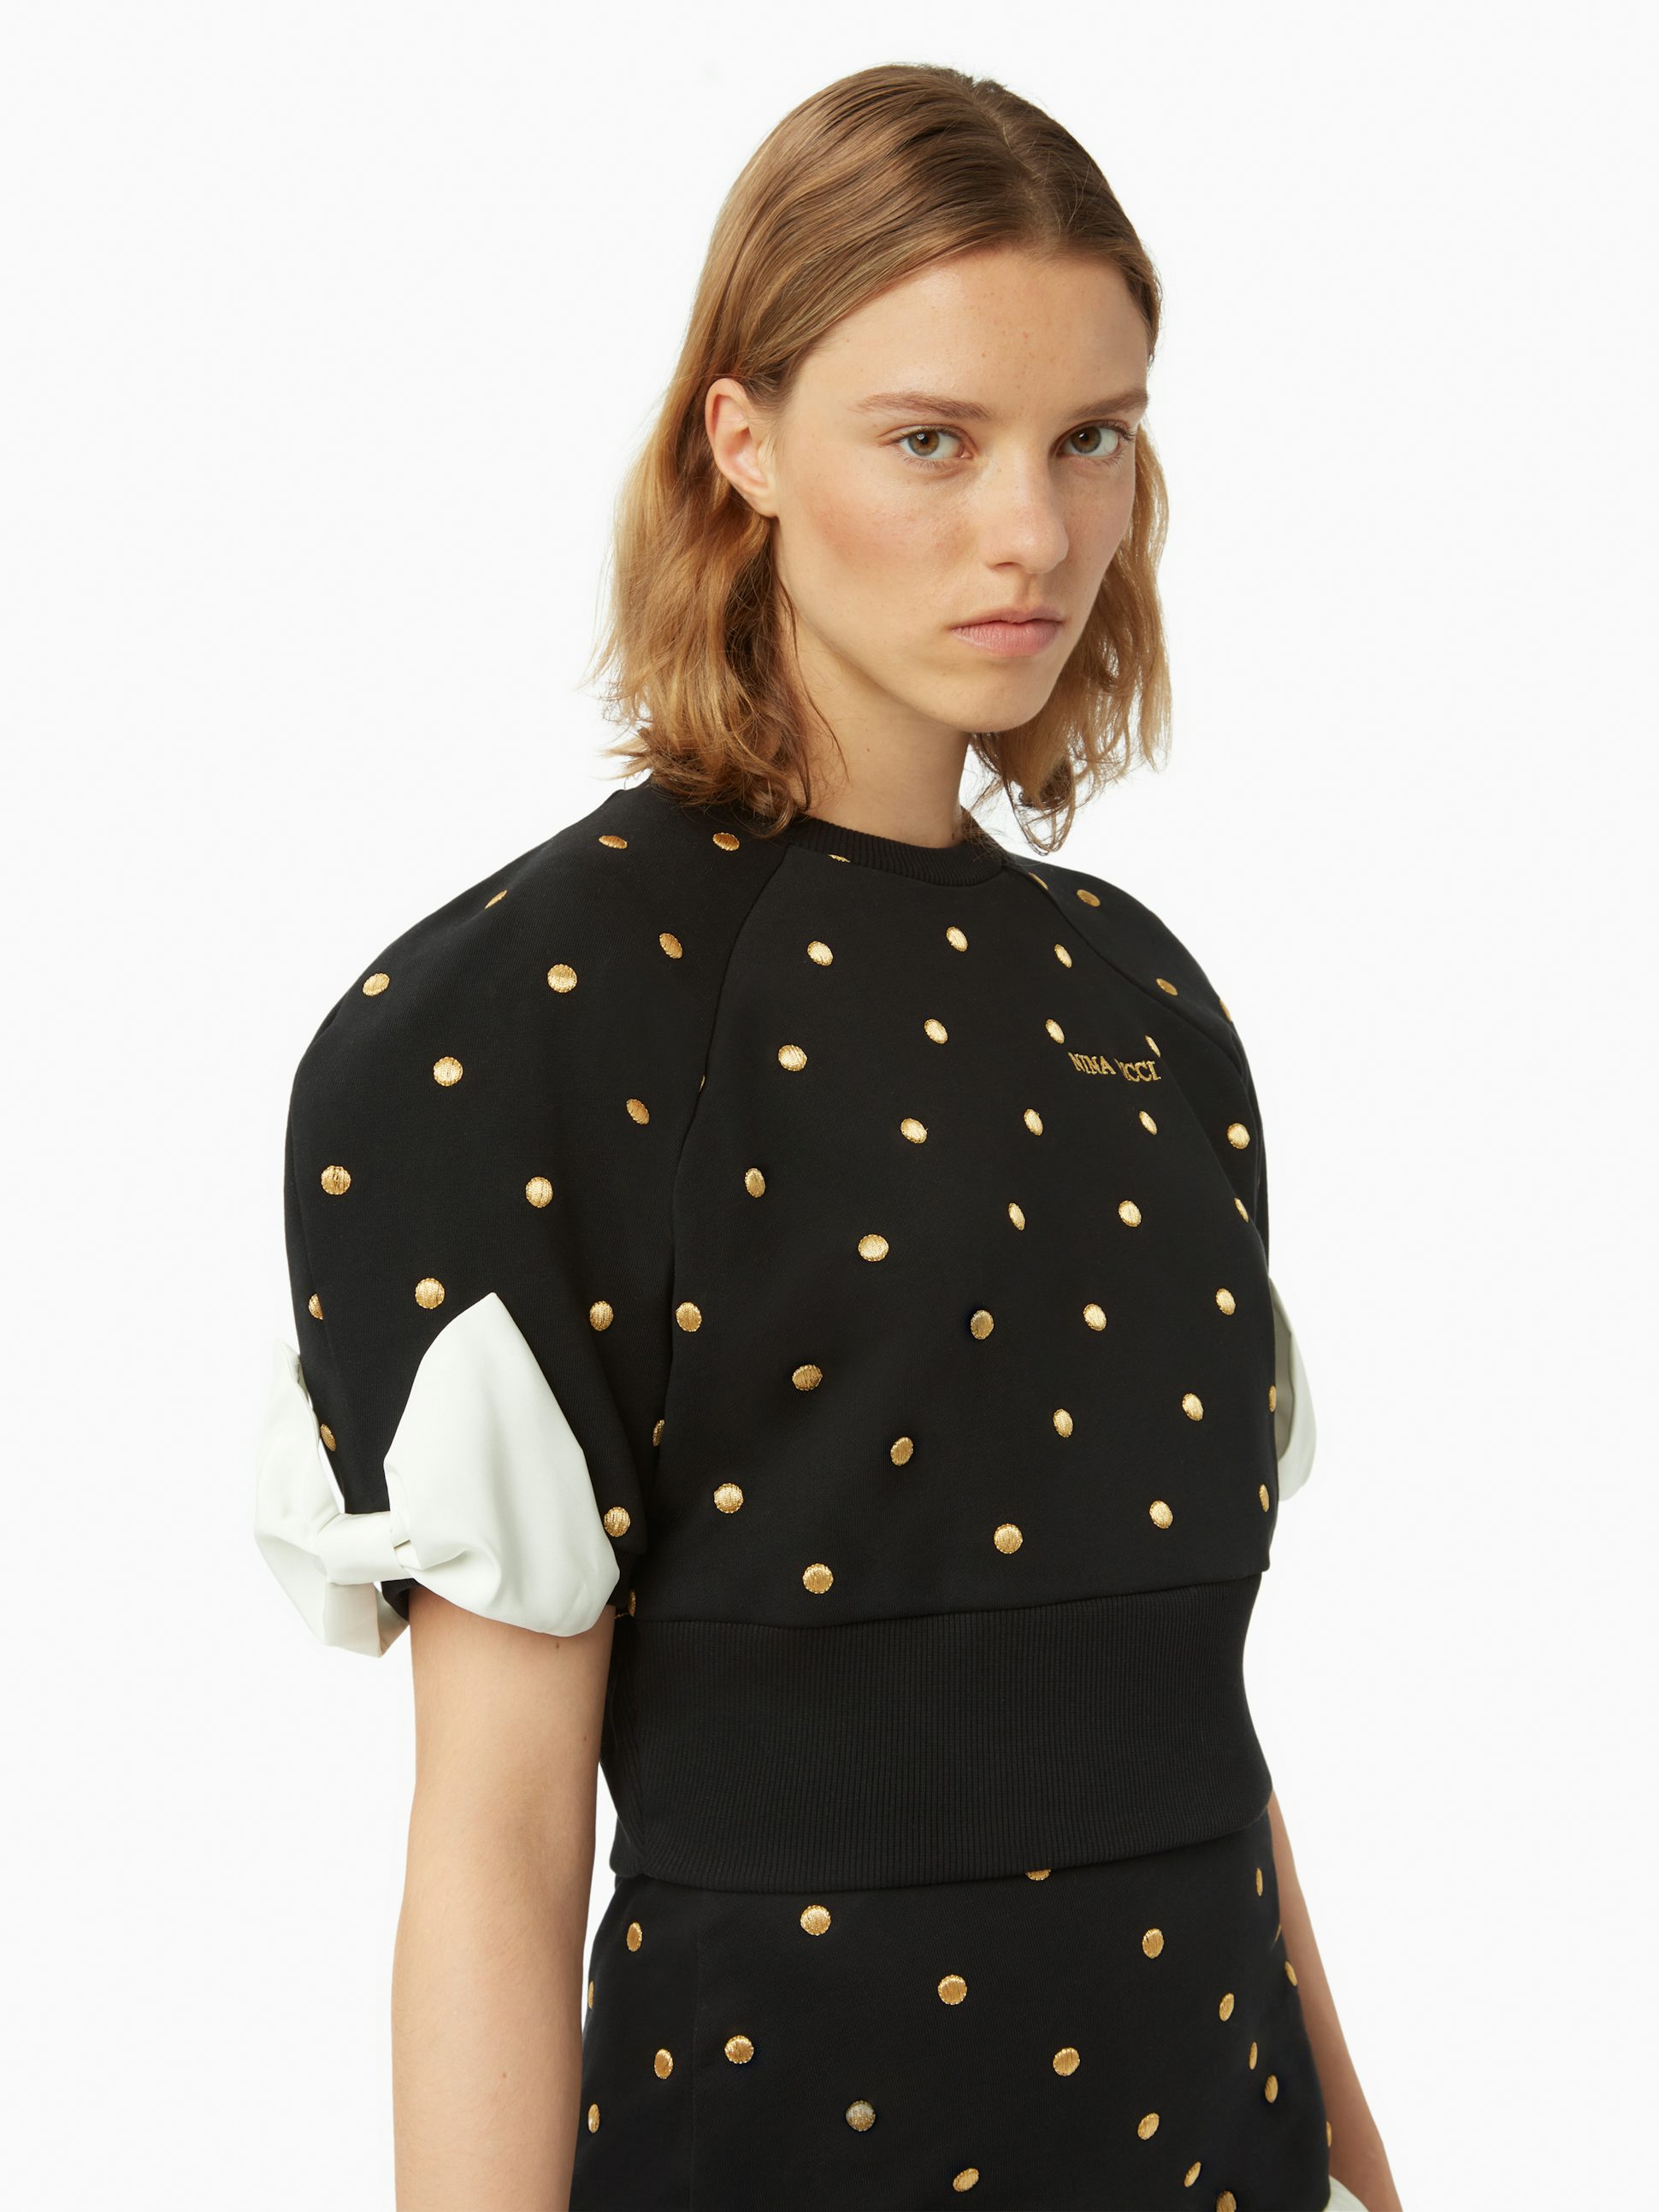 Cropped polka dot top in black - Nina Ricci